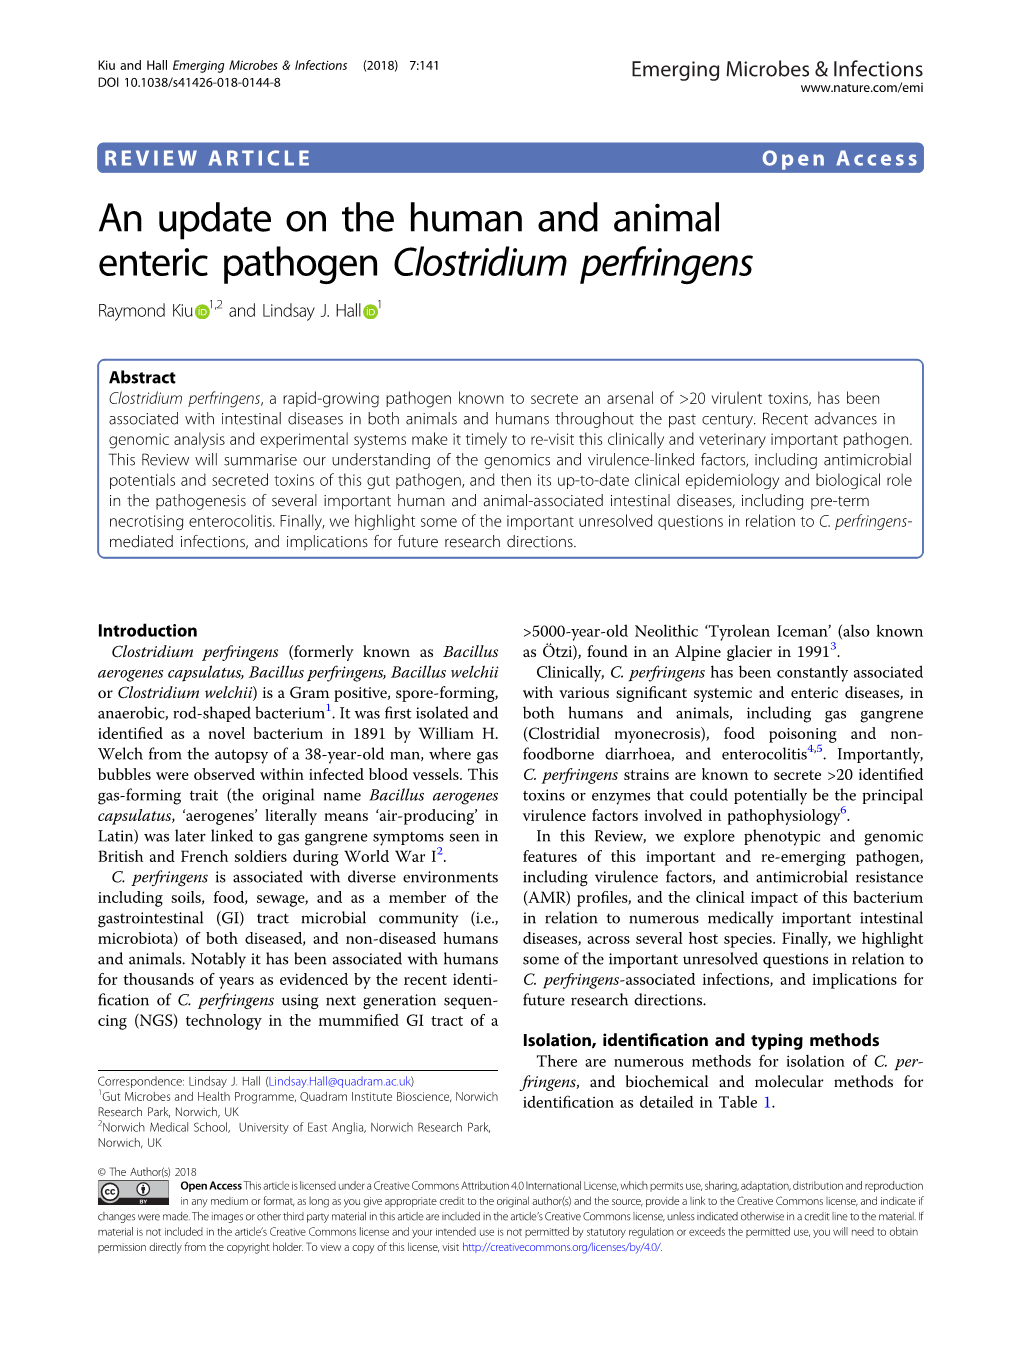 An Update on the Human and Animal Enteric Pathogen Clostridium Perfringens Raymond Kiu 1,2 and Lindsay J